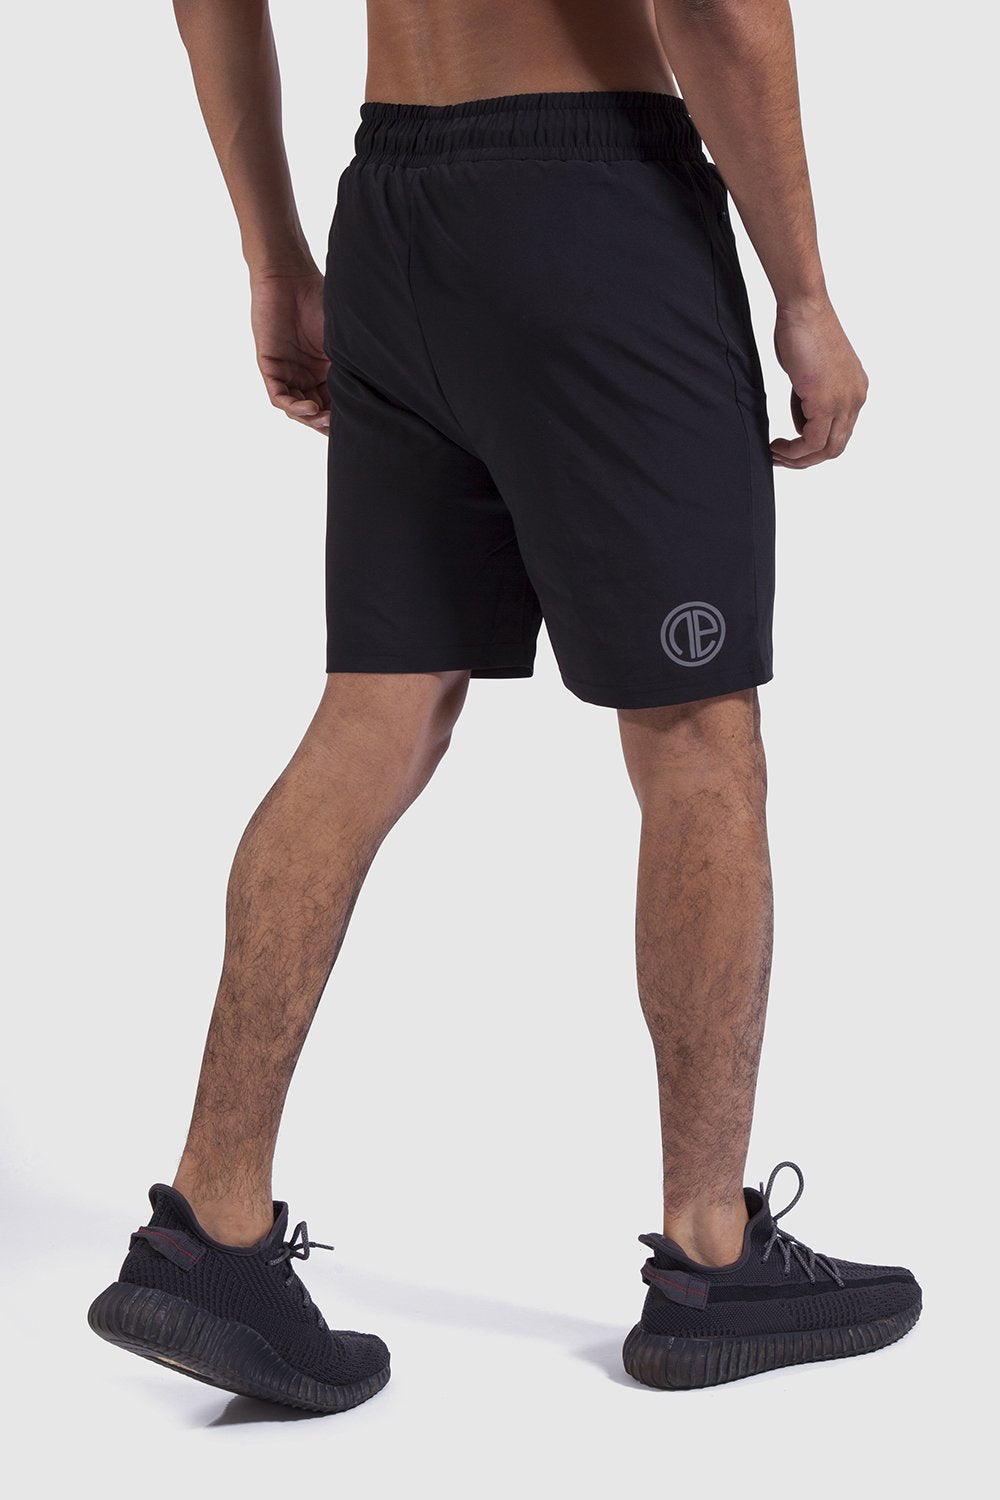 Back detail and logo of mens training shorts